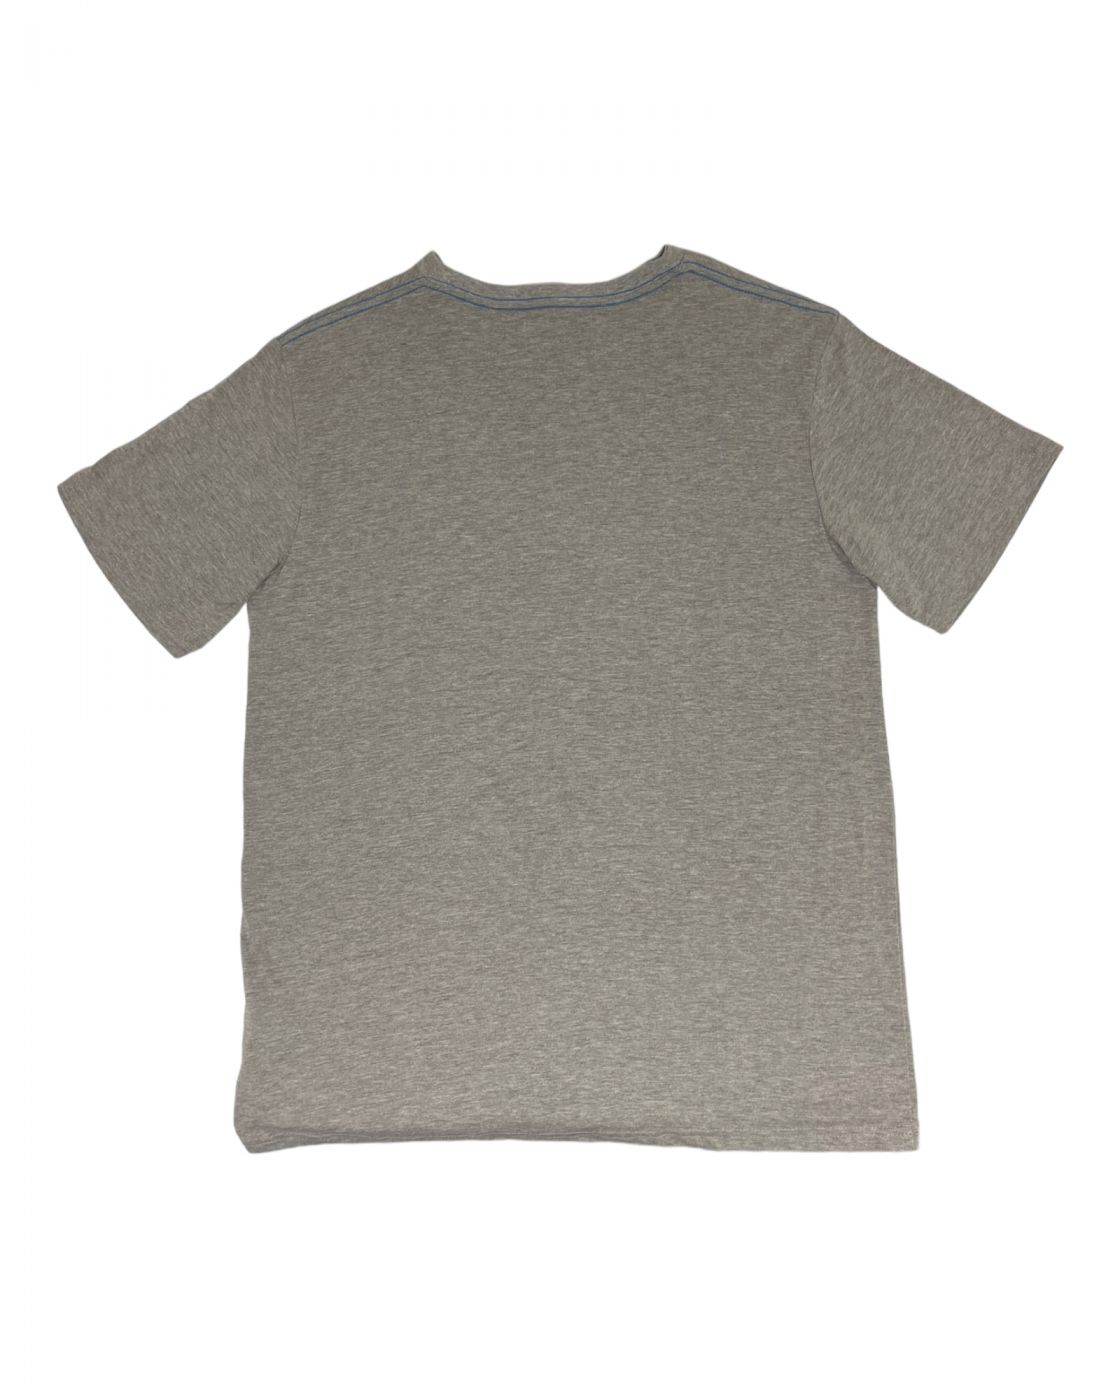 A Bathing Ape T shirt Grey Gray Large BAPE-264885